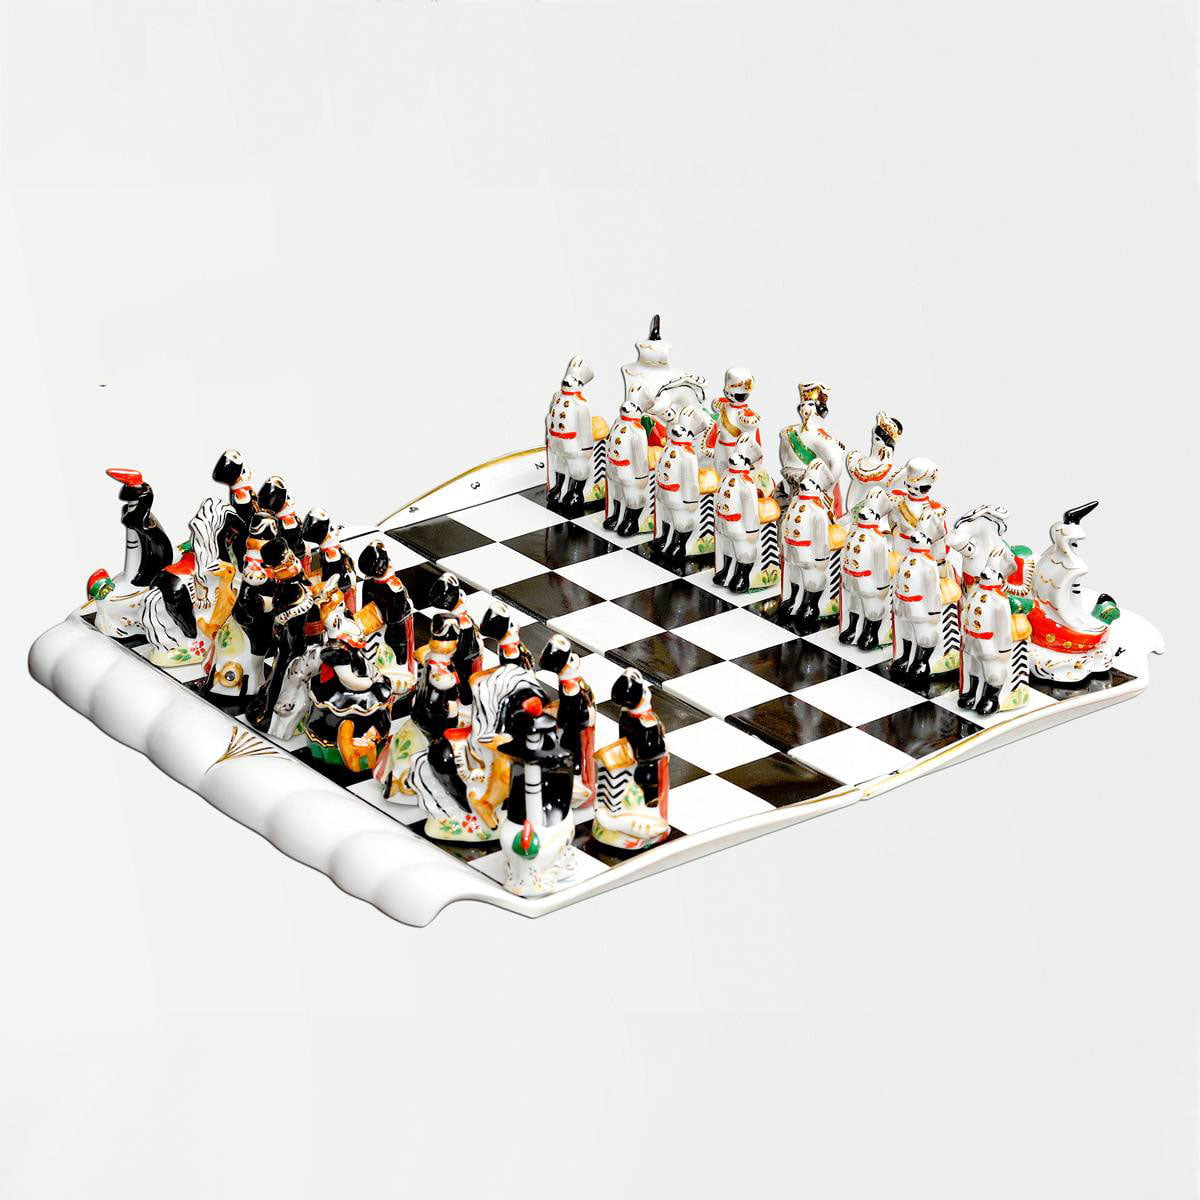 Фарфоровые шахматы (Гарднеръ, 1990-е гг.)